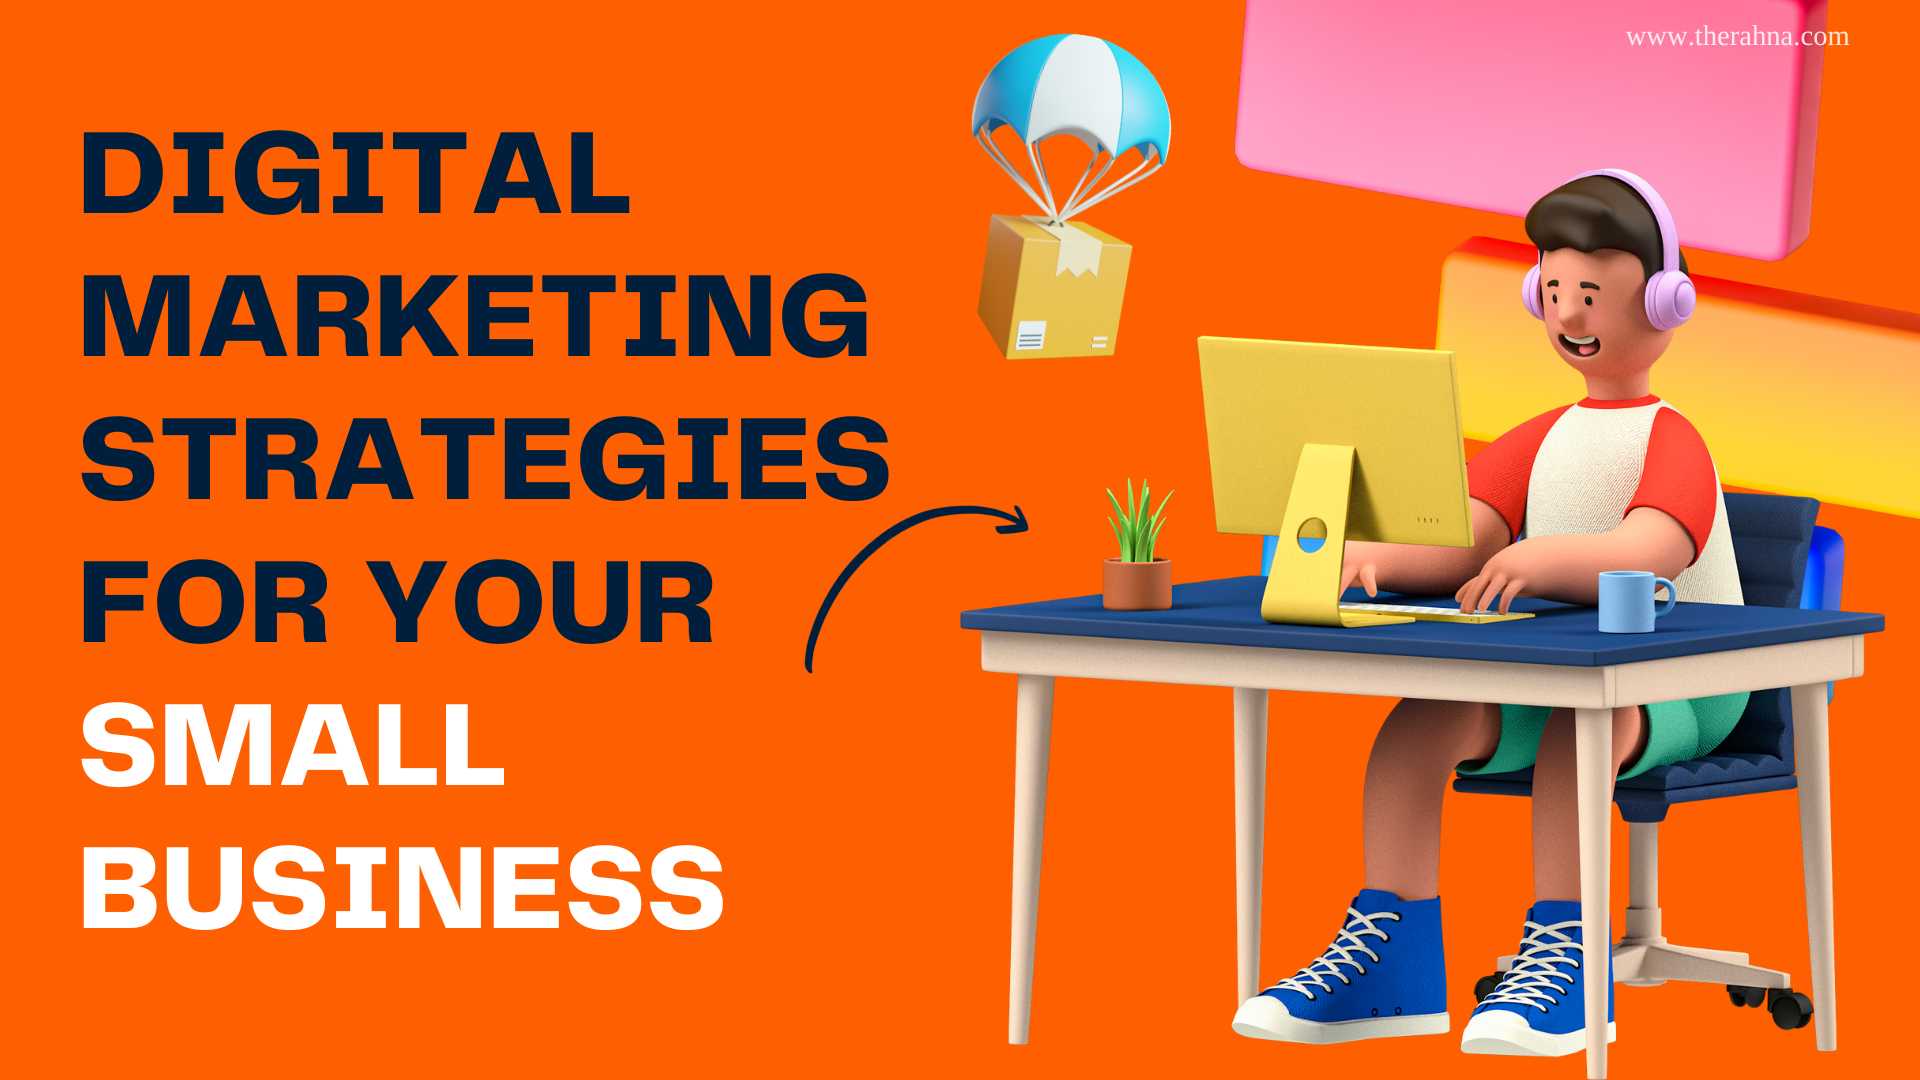 Small Business digital marketing strategy